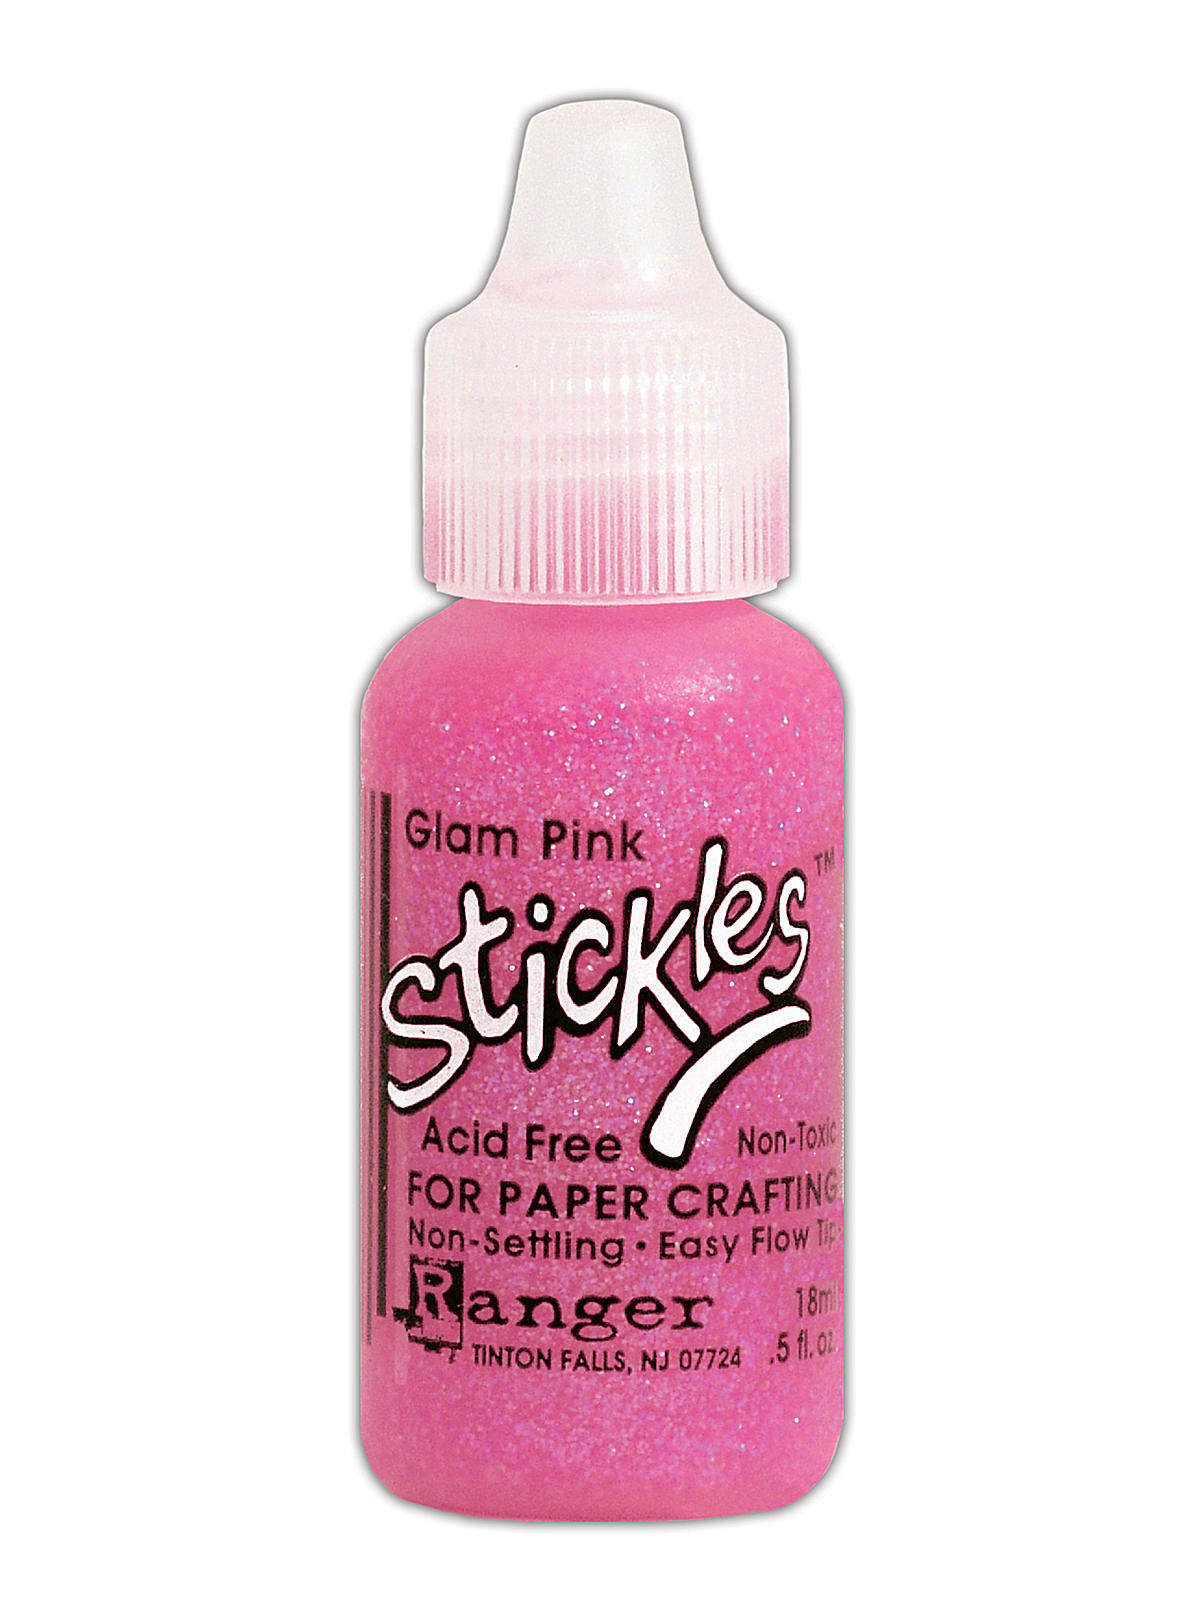 Stickles Glitter Glue Glam Pink 0.5 Oz. Bottle